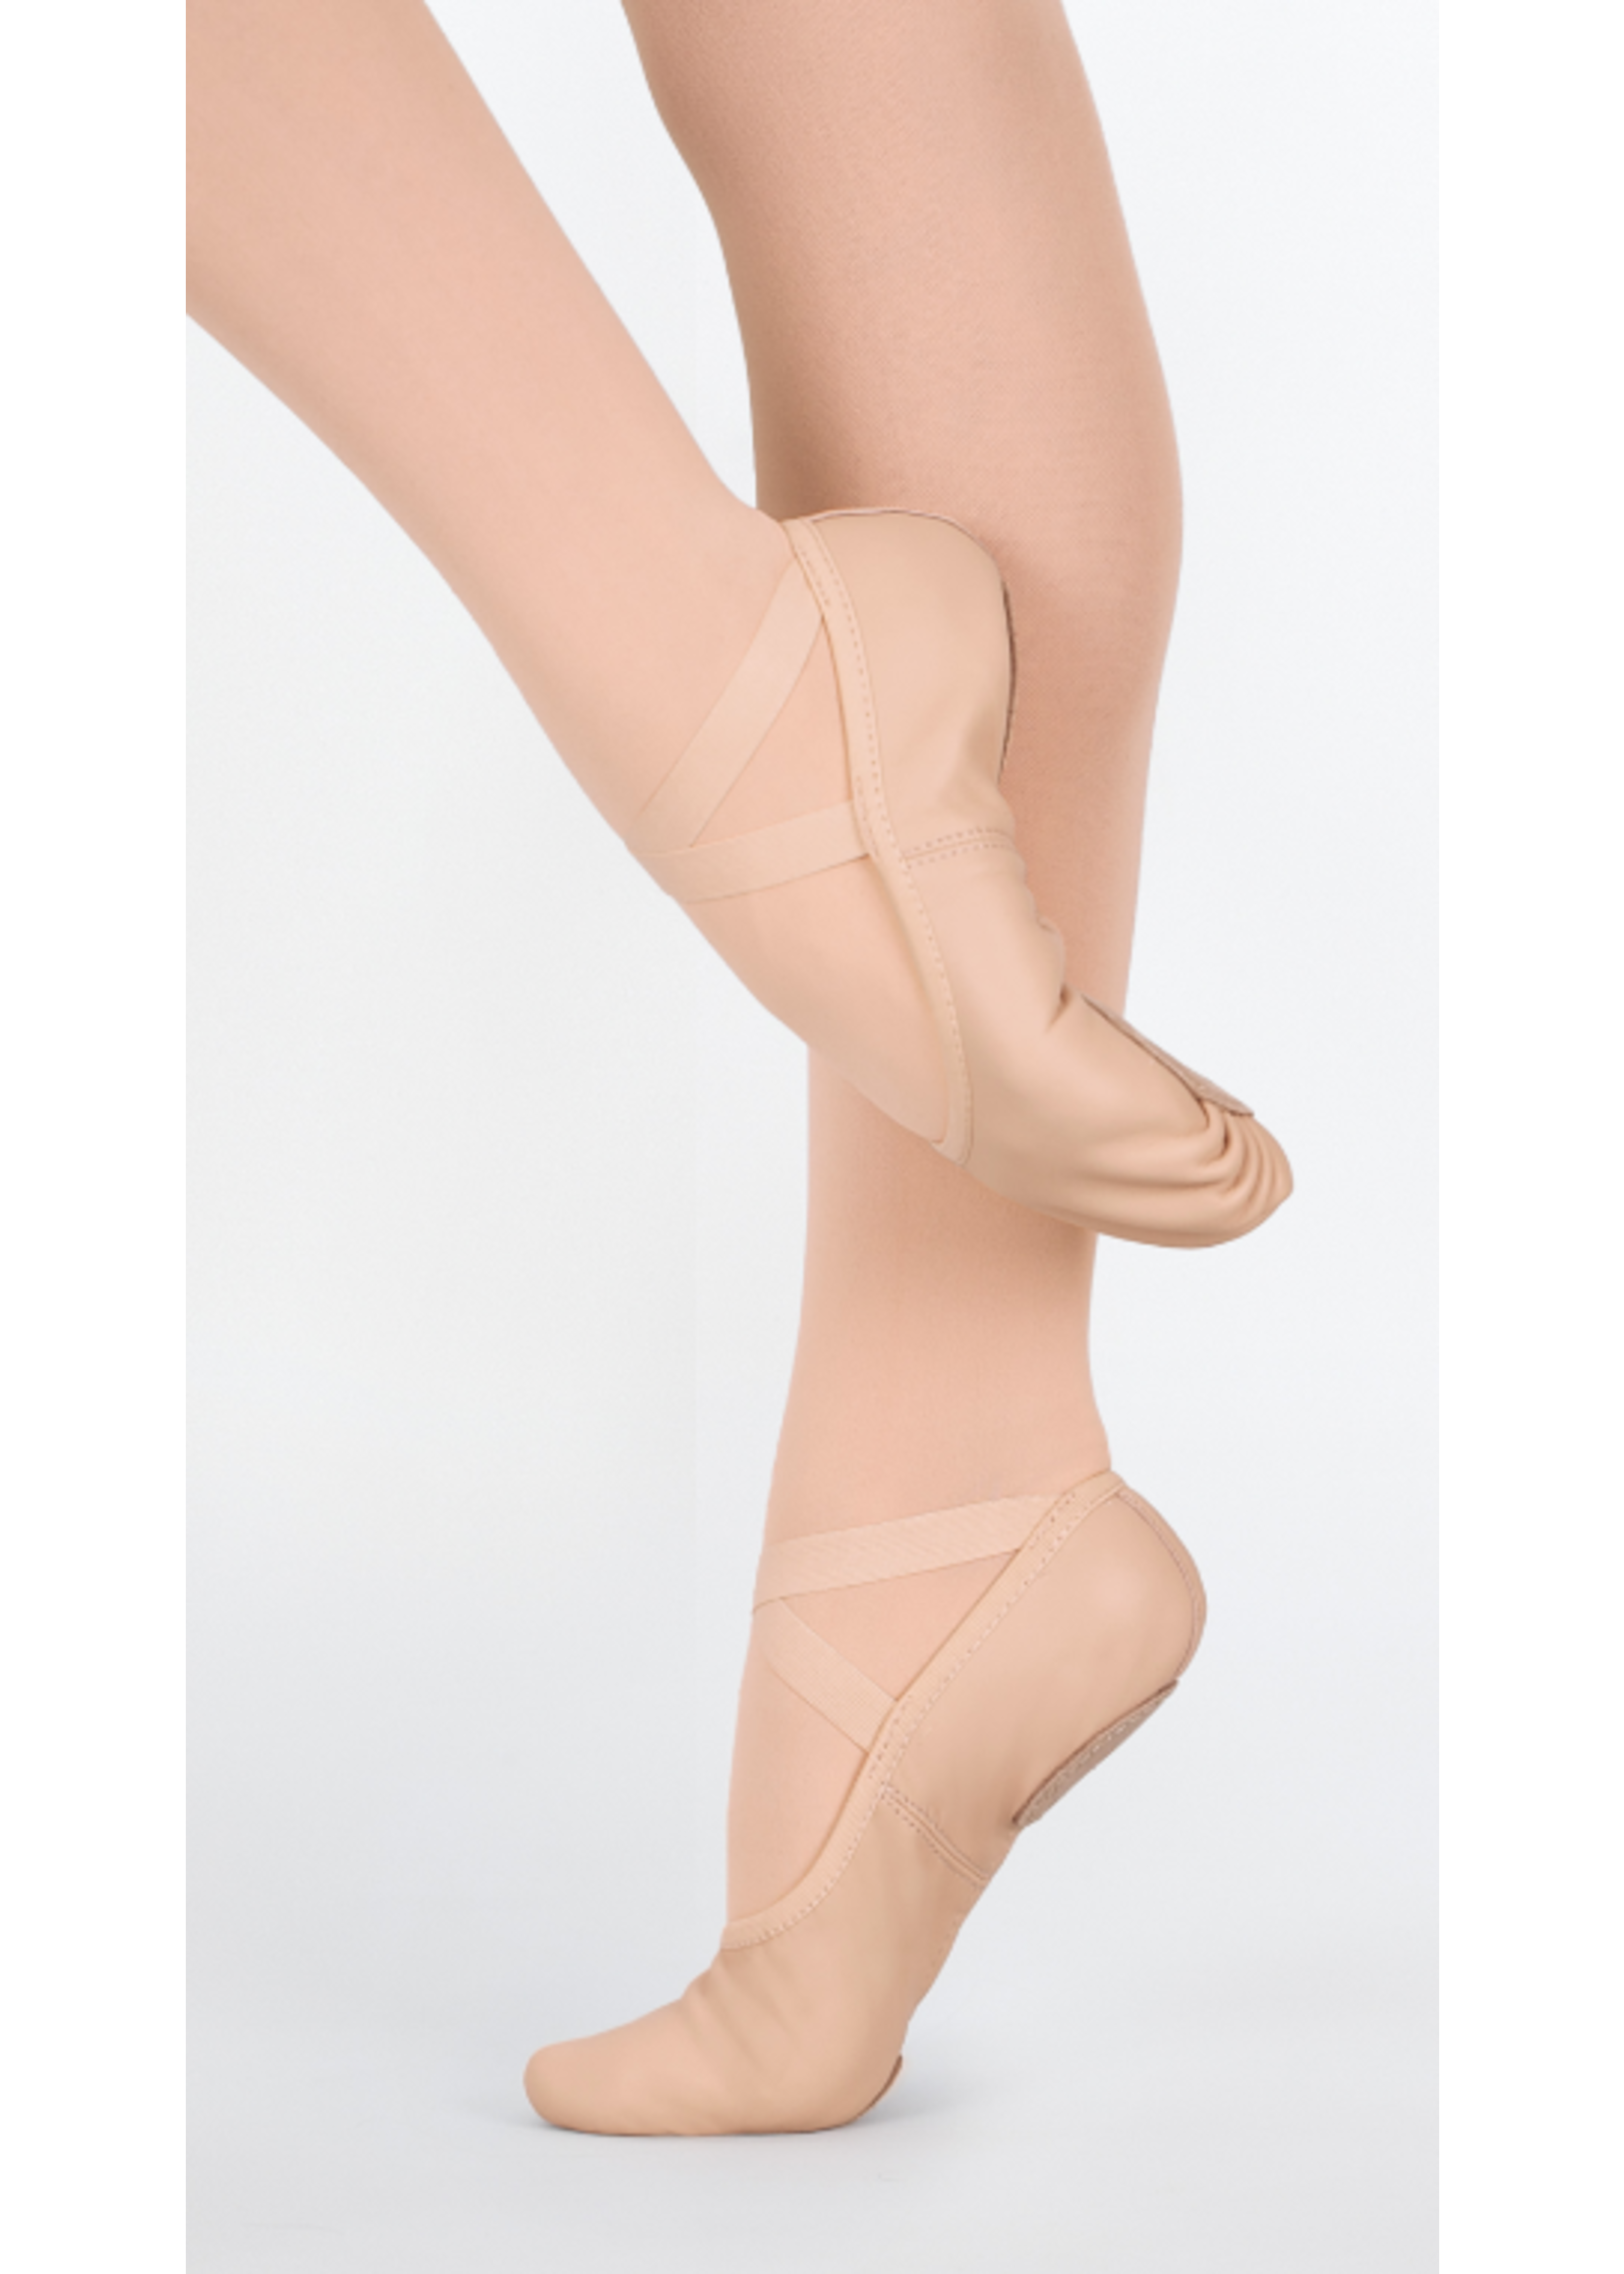 Eurotard Coupe Split Sole Leather Ballet Shoe - The Dance Shop of